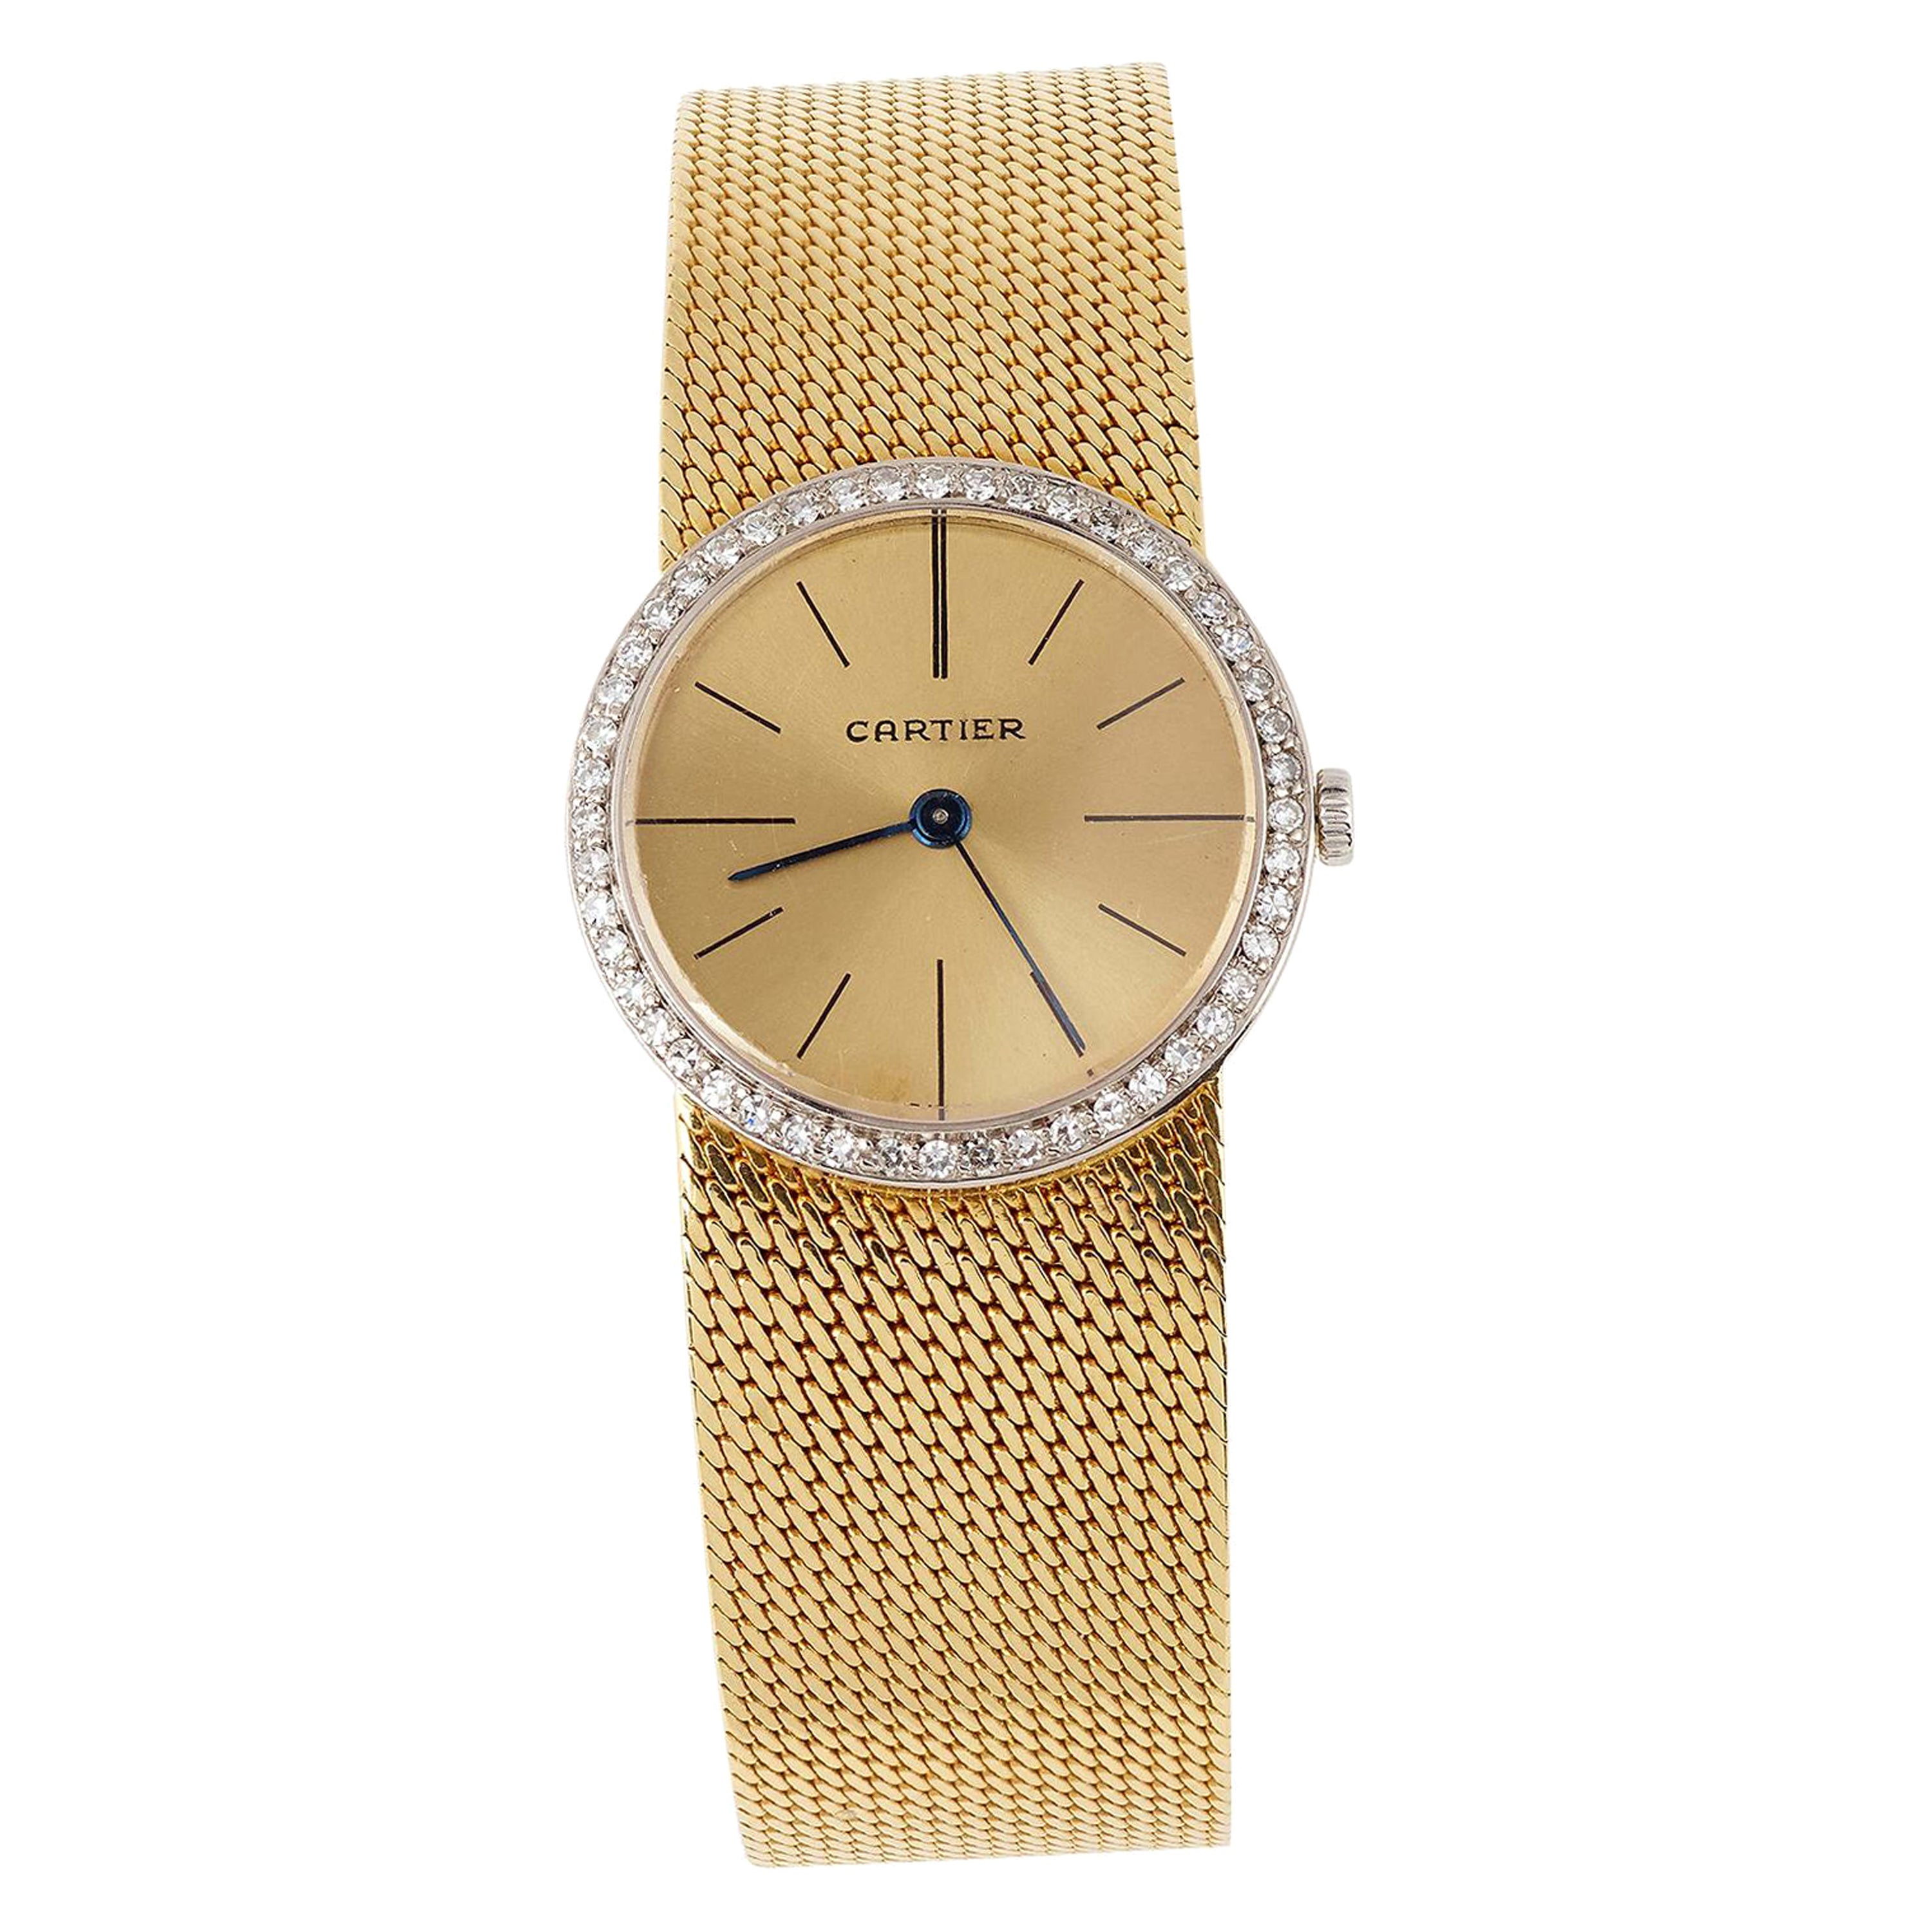 Vintage Cartier Altiplano Piaget Movement Diamonds 18 Karat Yellow Gold Watch